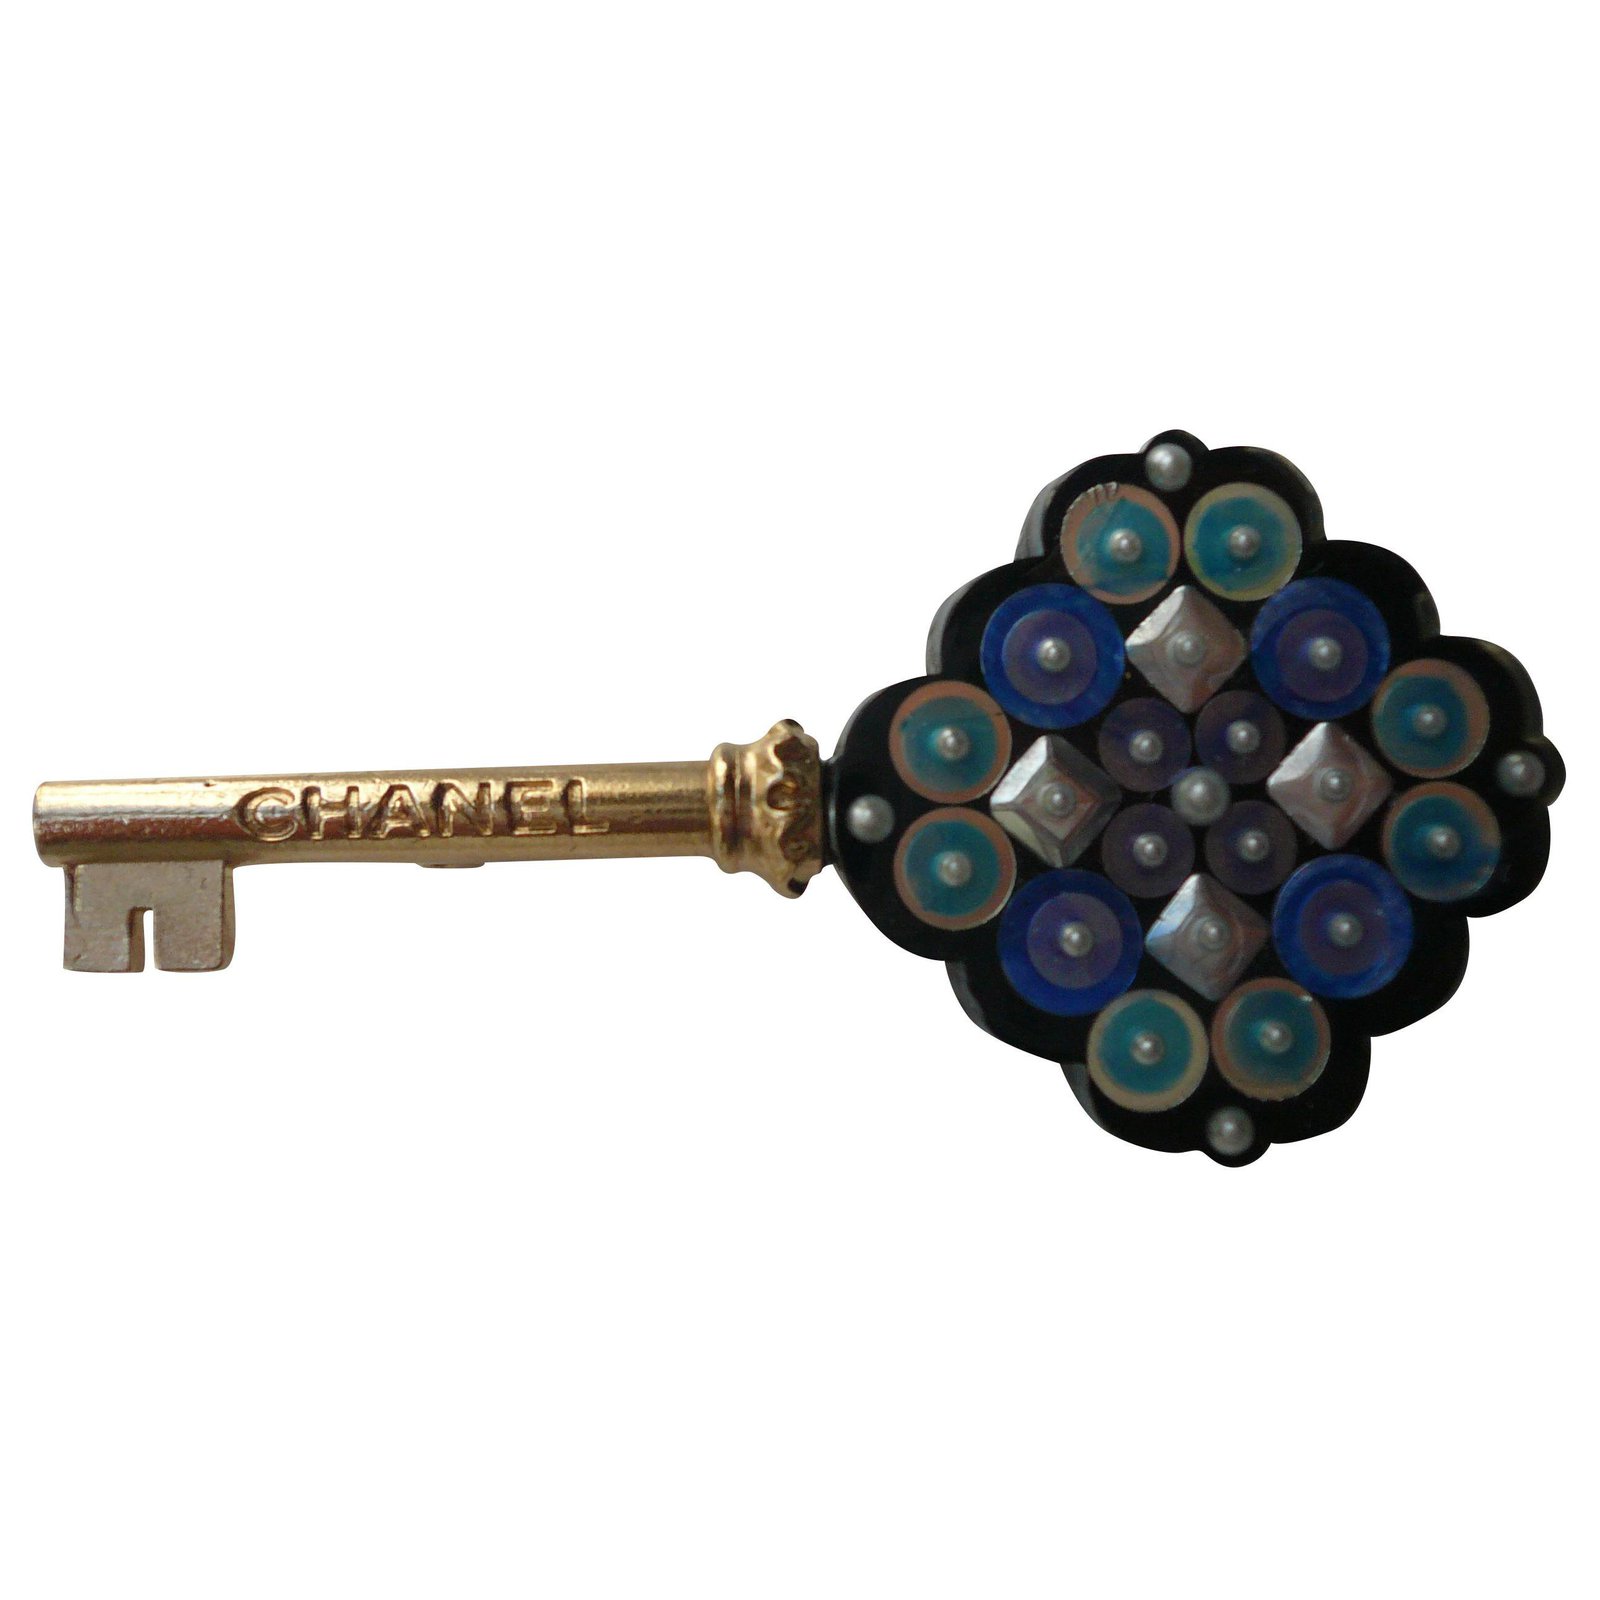 Chanel key motif brooch - Gem